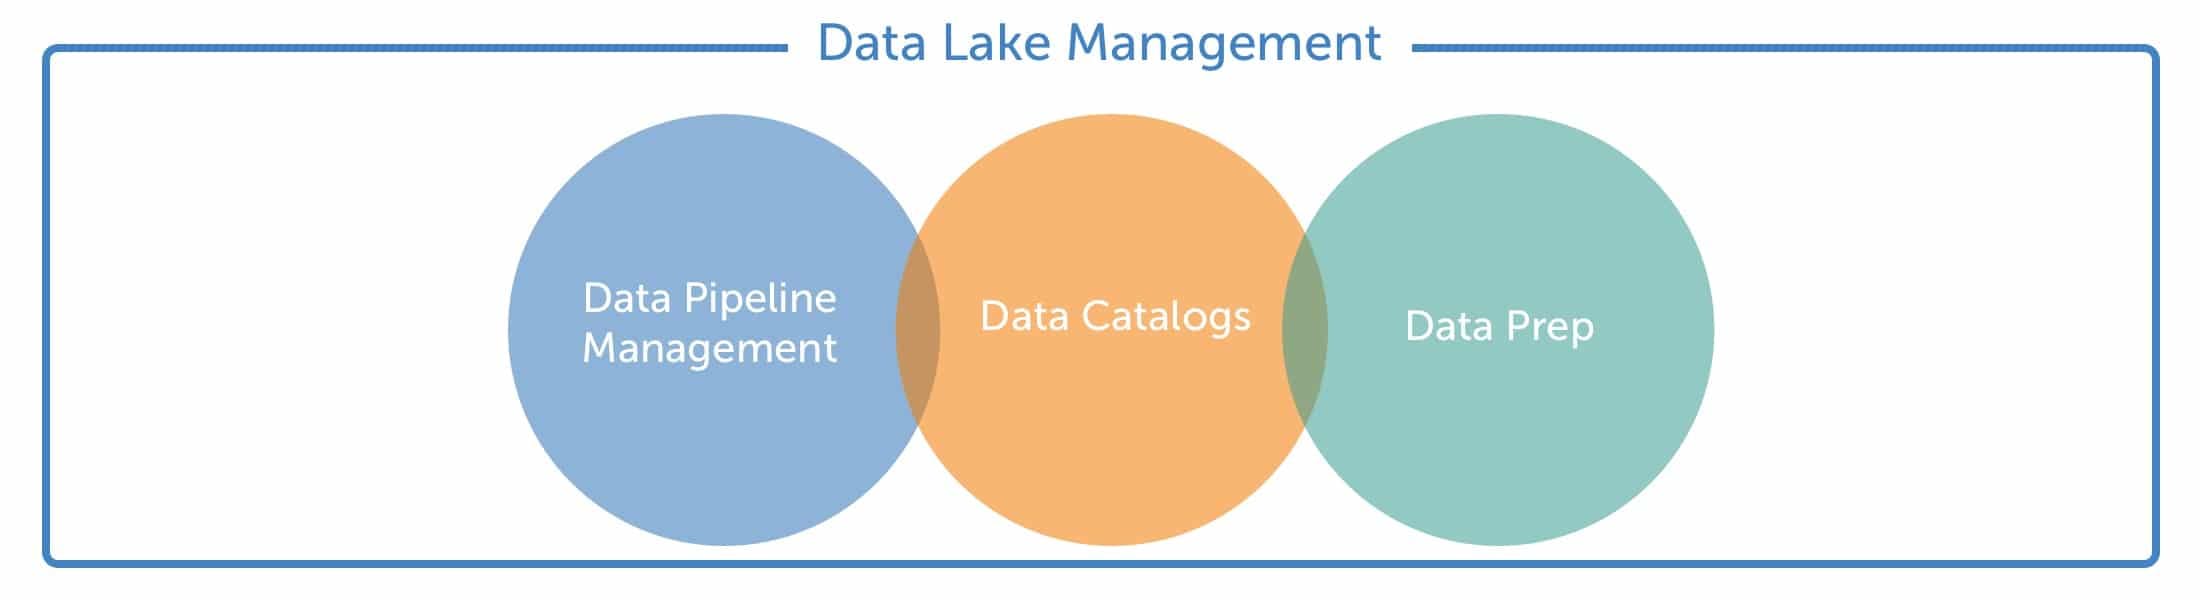 Data Lake Management diagram